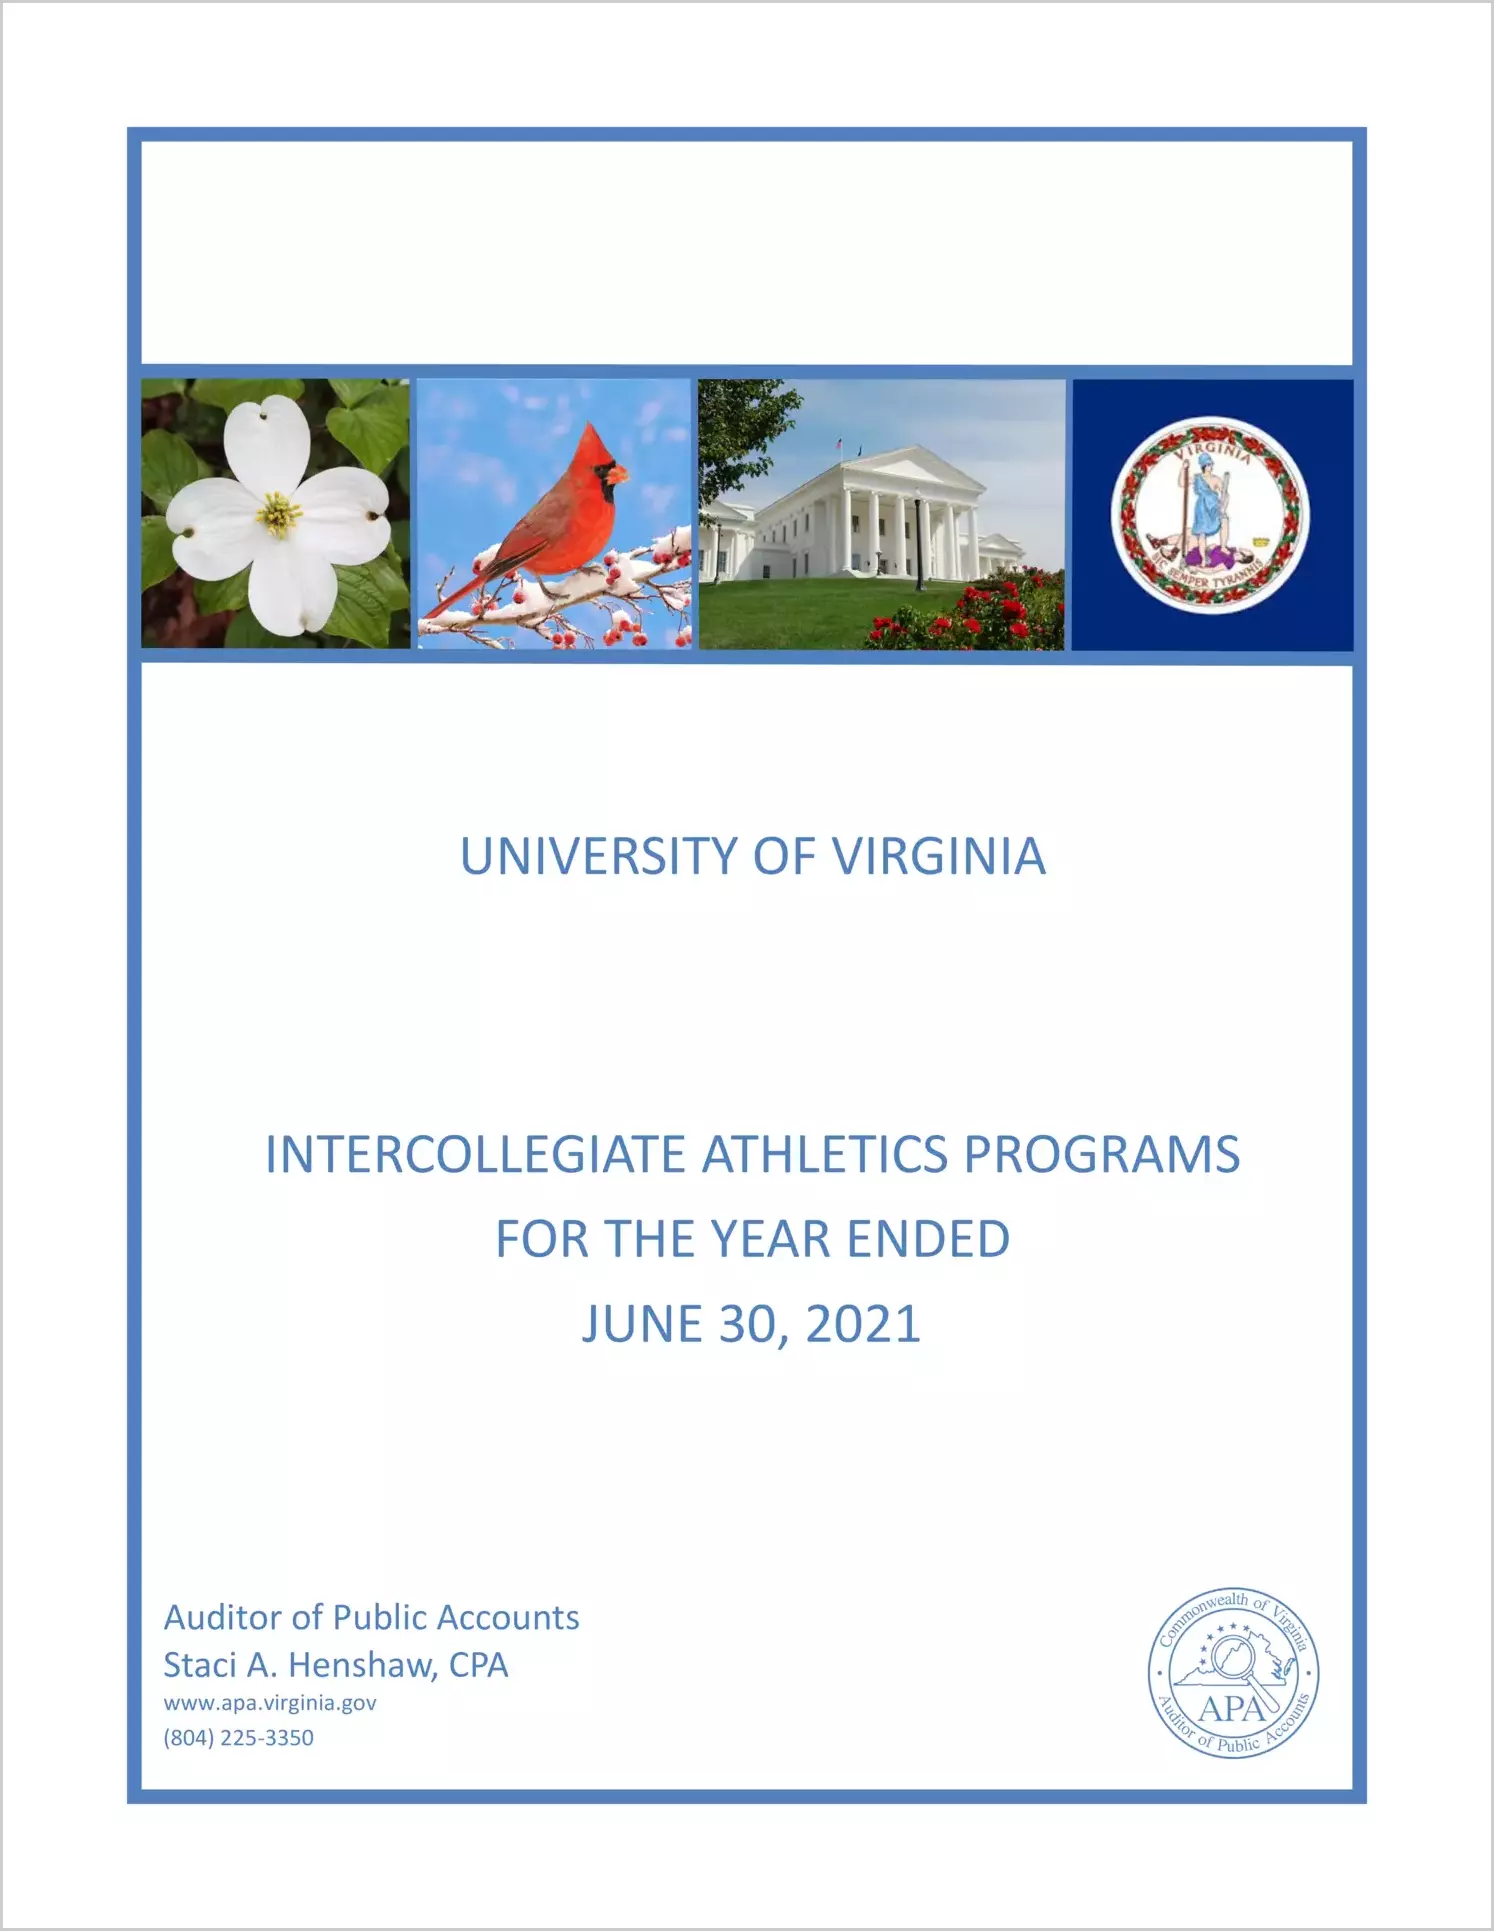 University of Virginia Intercollegiate Athletics Programs for the year ended June 30, 2021